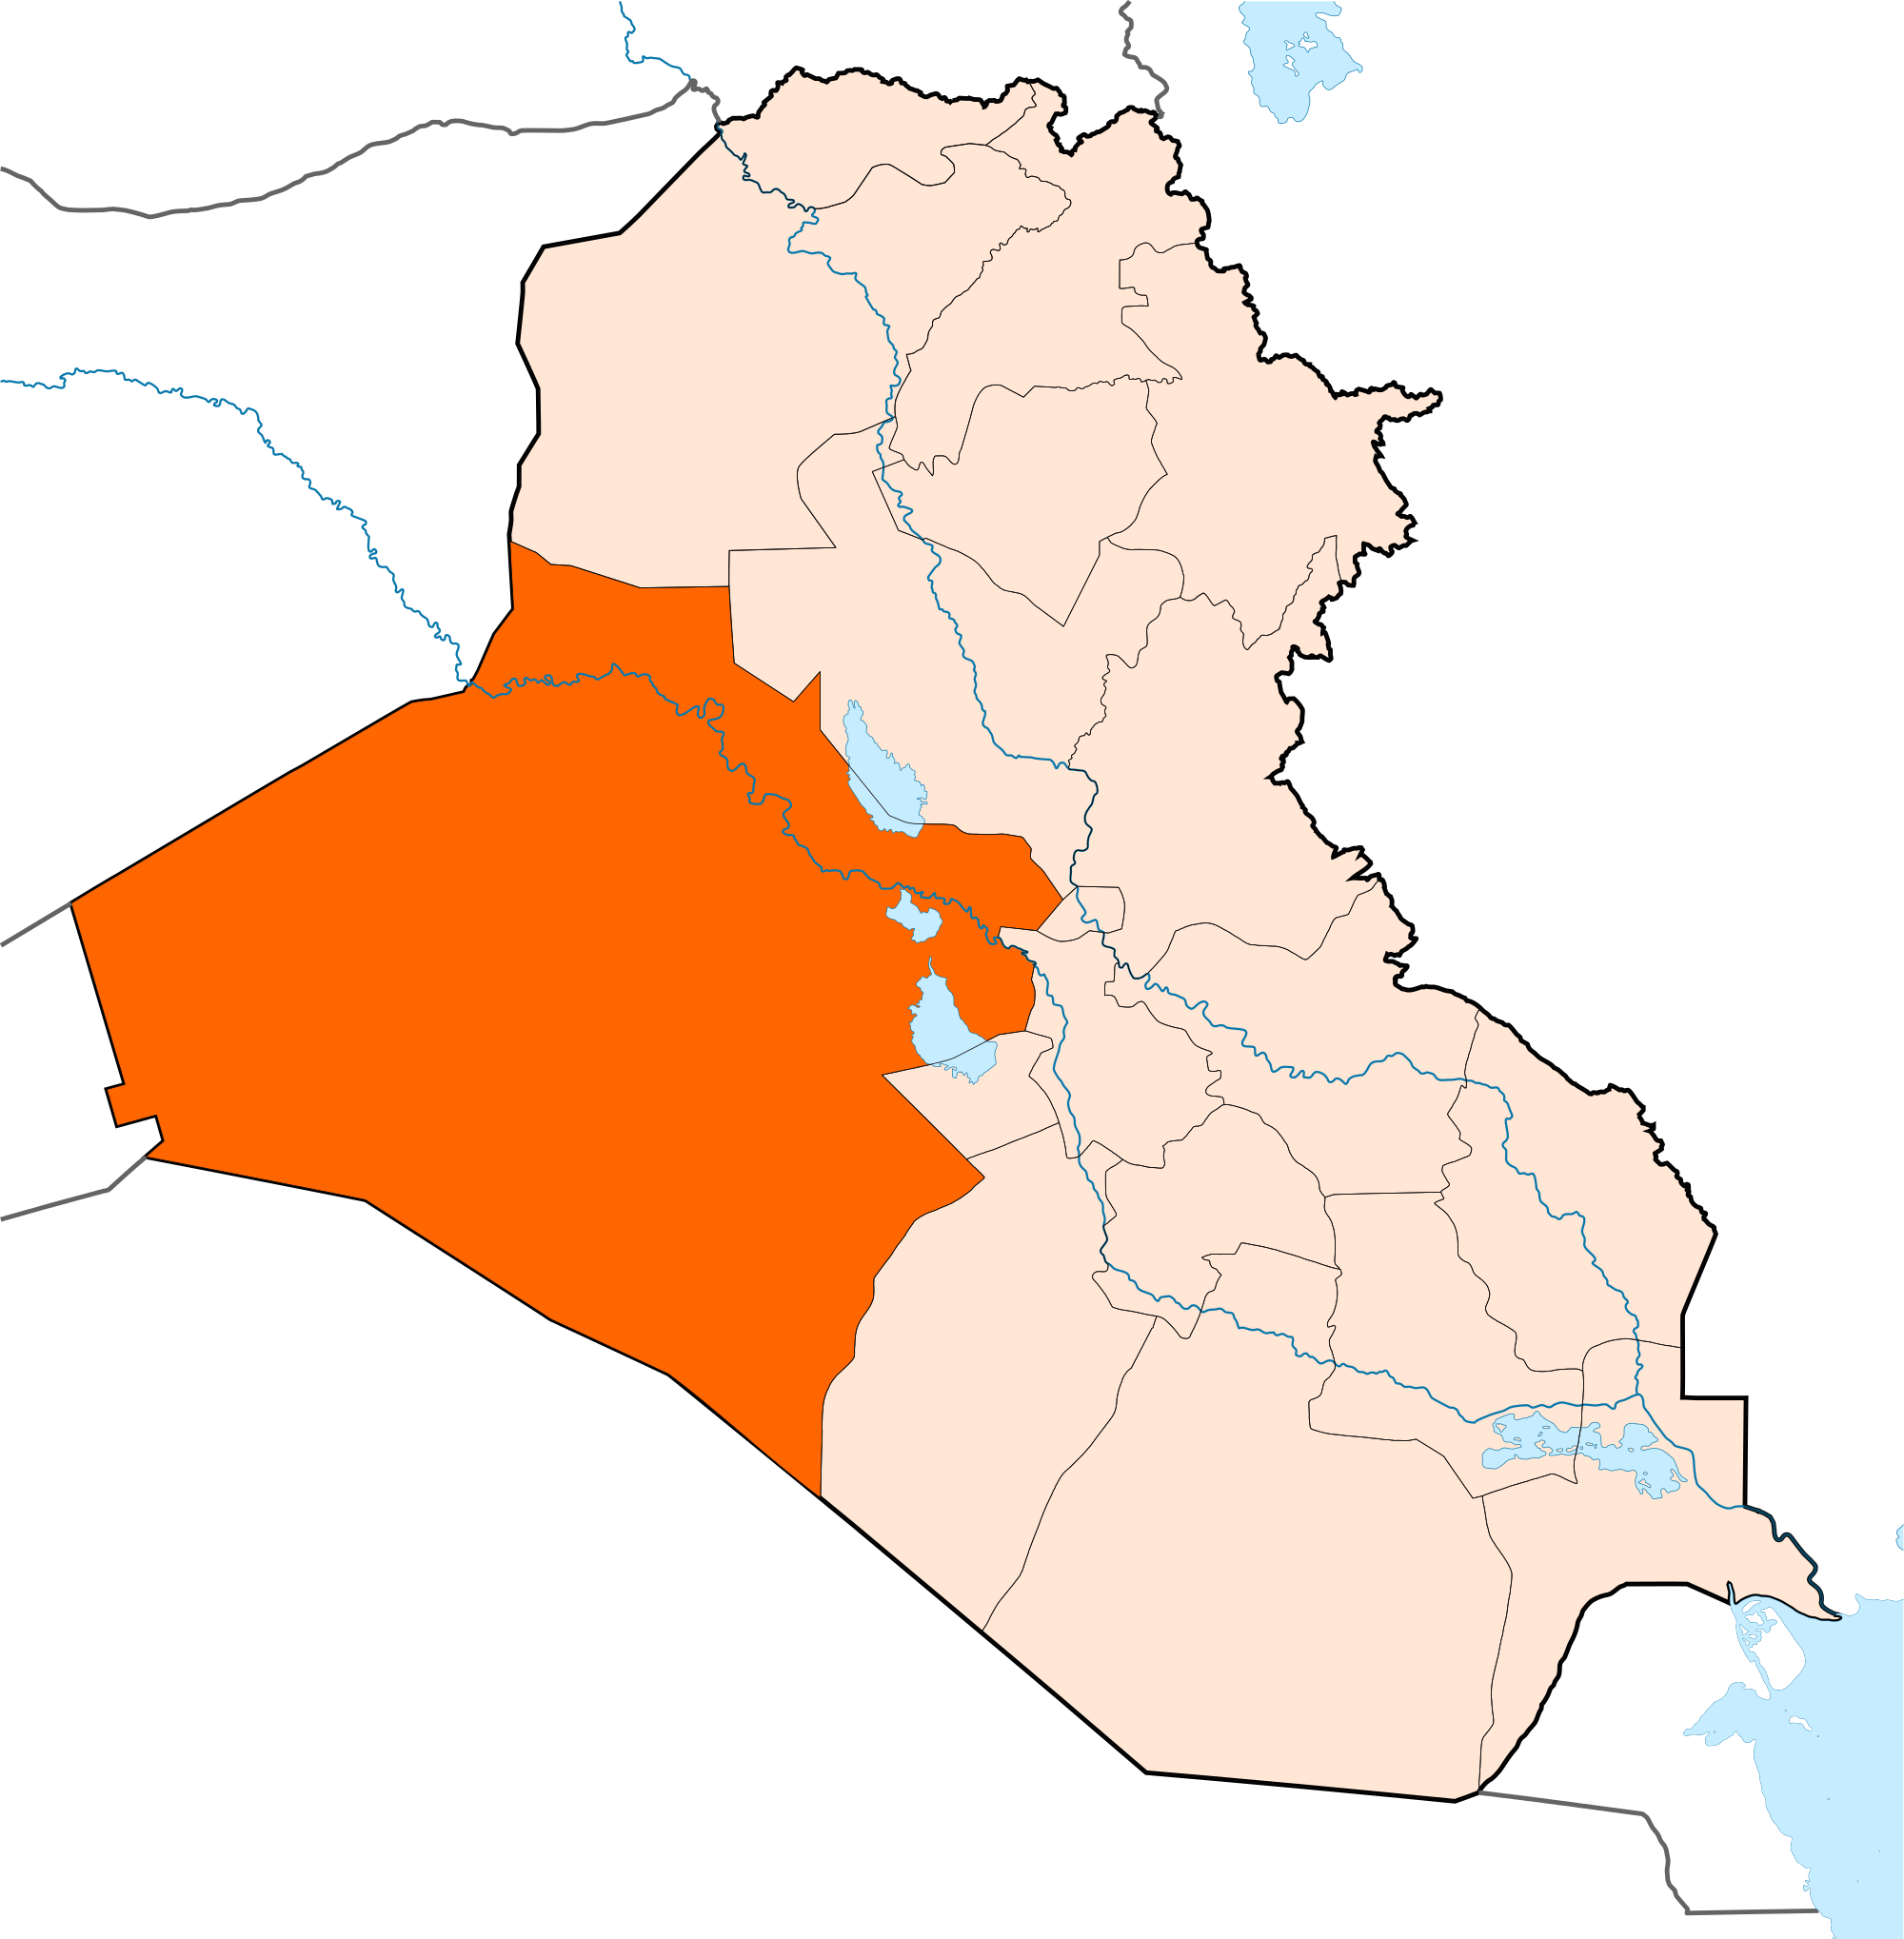 Iraq War in Anbar Province - Wikipedia, the free encyclopedia